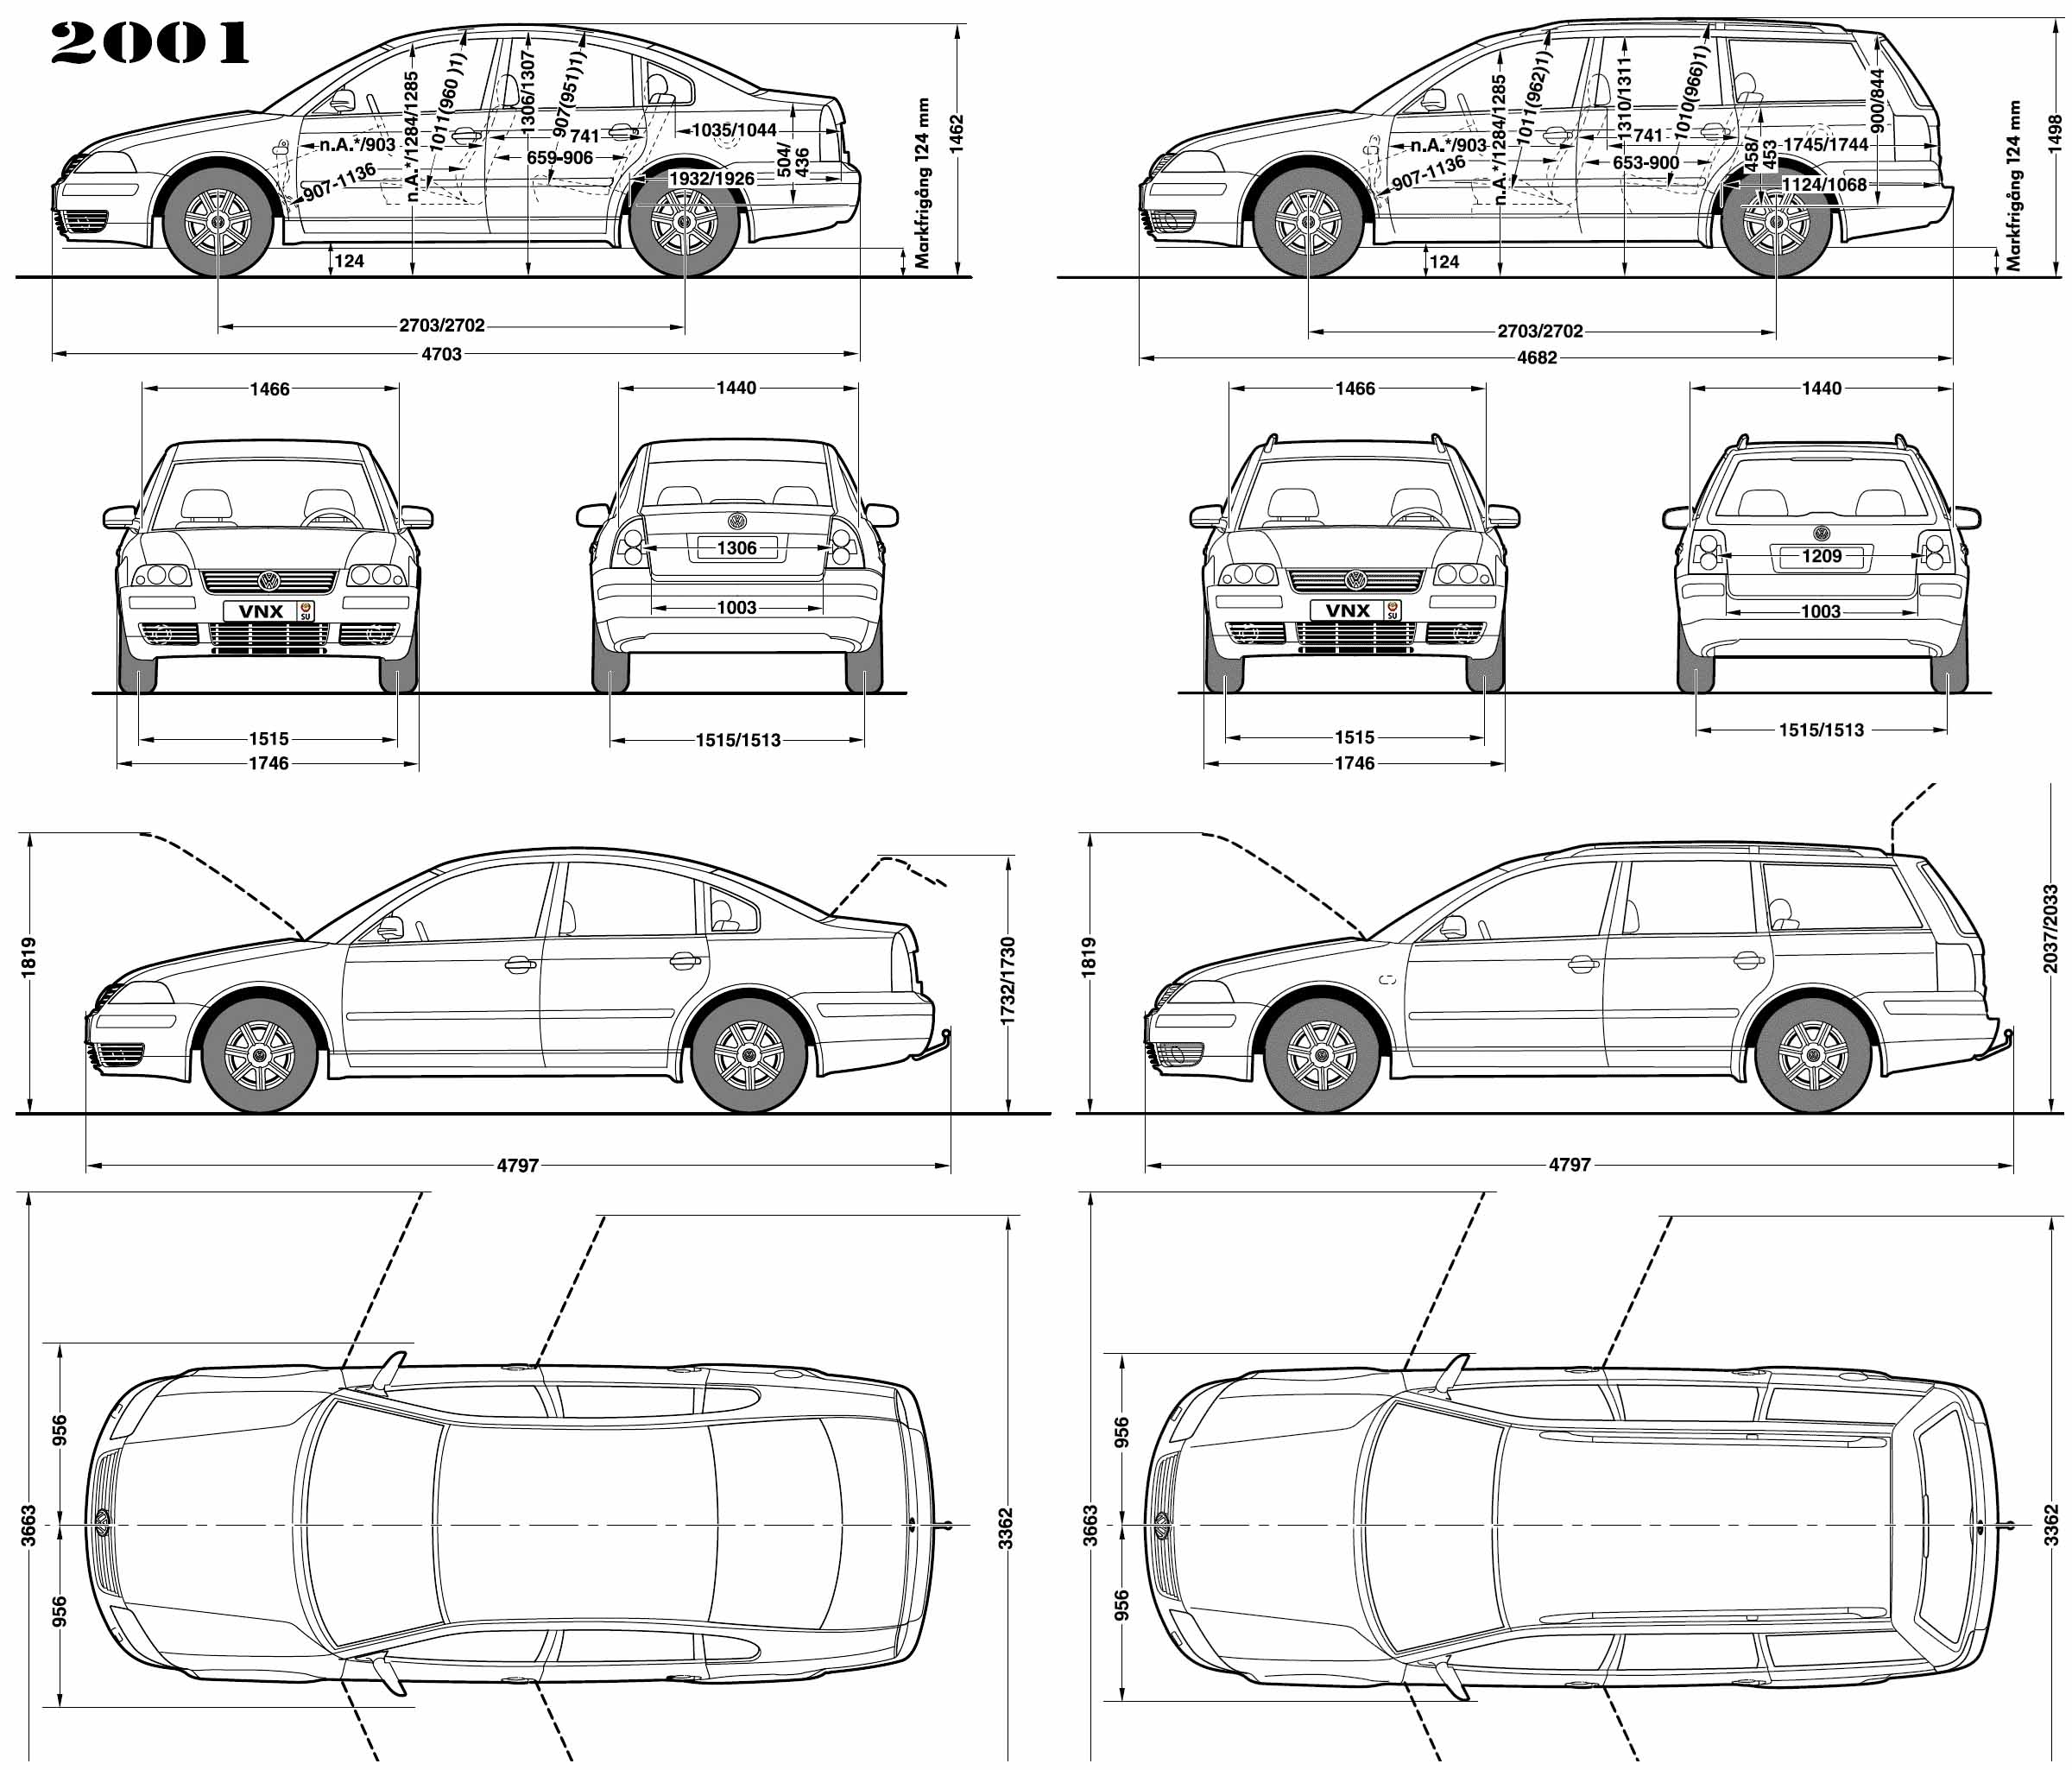 Габаритные размеры Фольксваген Пассат Б5 2001 (dimensions VW Passat B5)